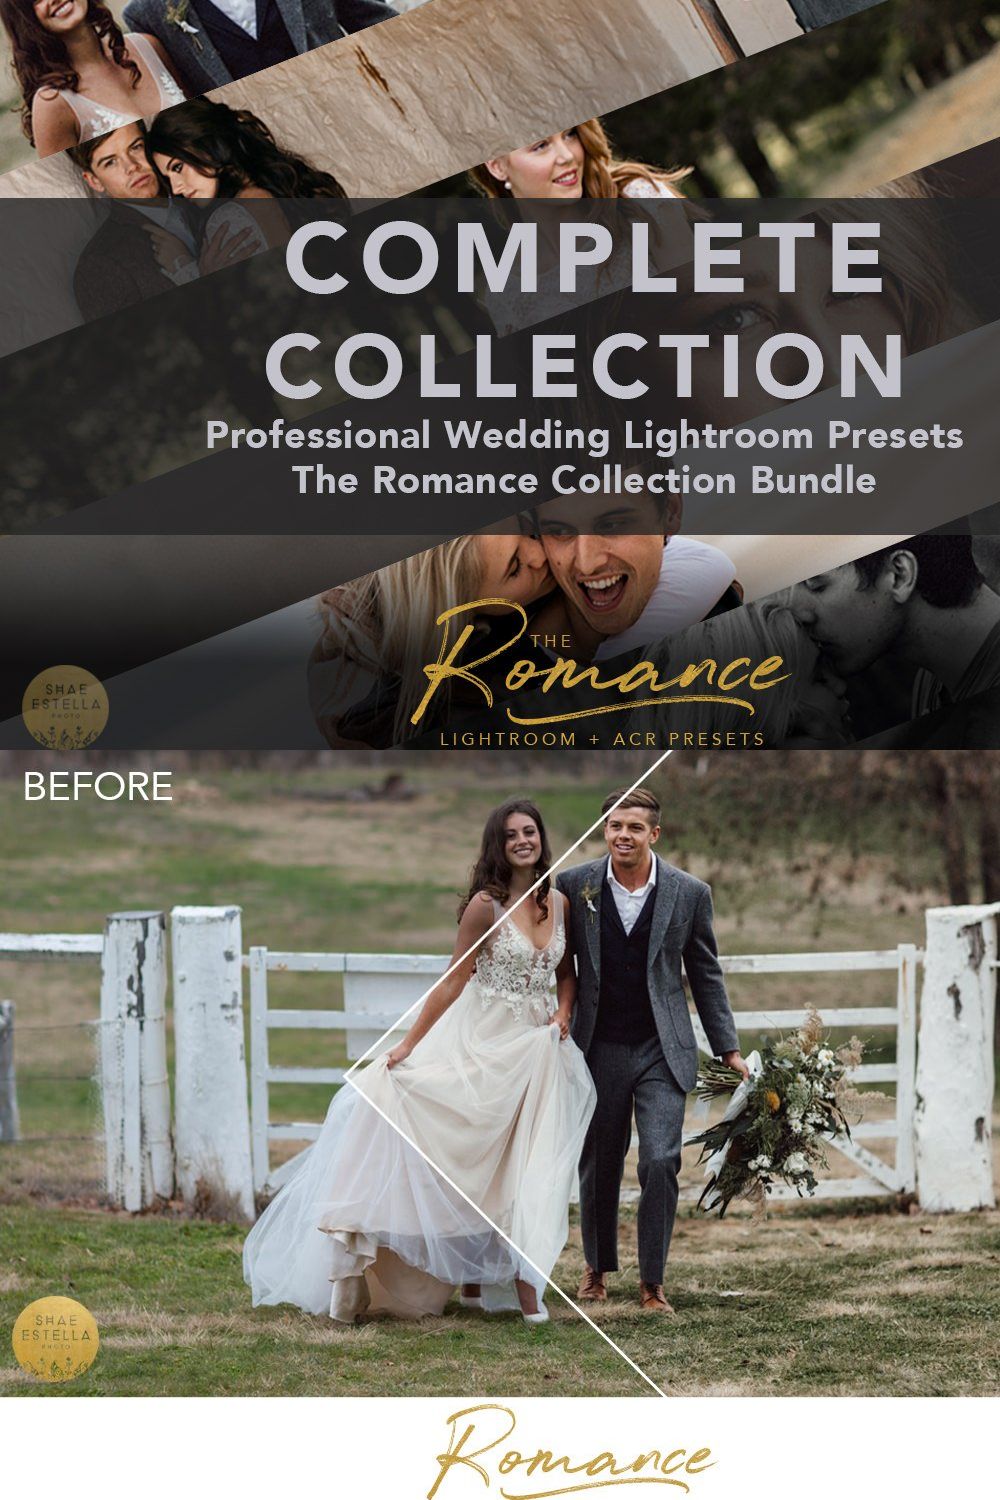 The Romance Collection LR ACR pinterest preview image.